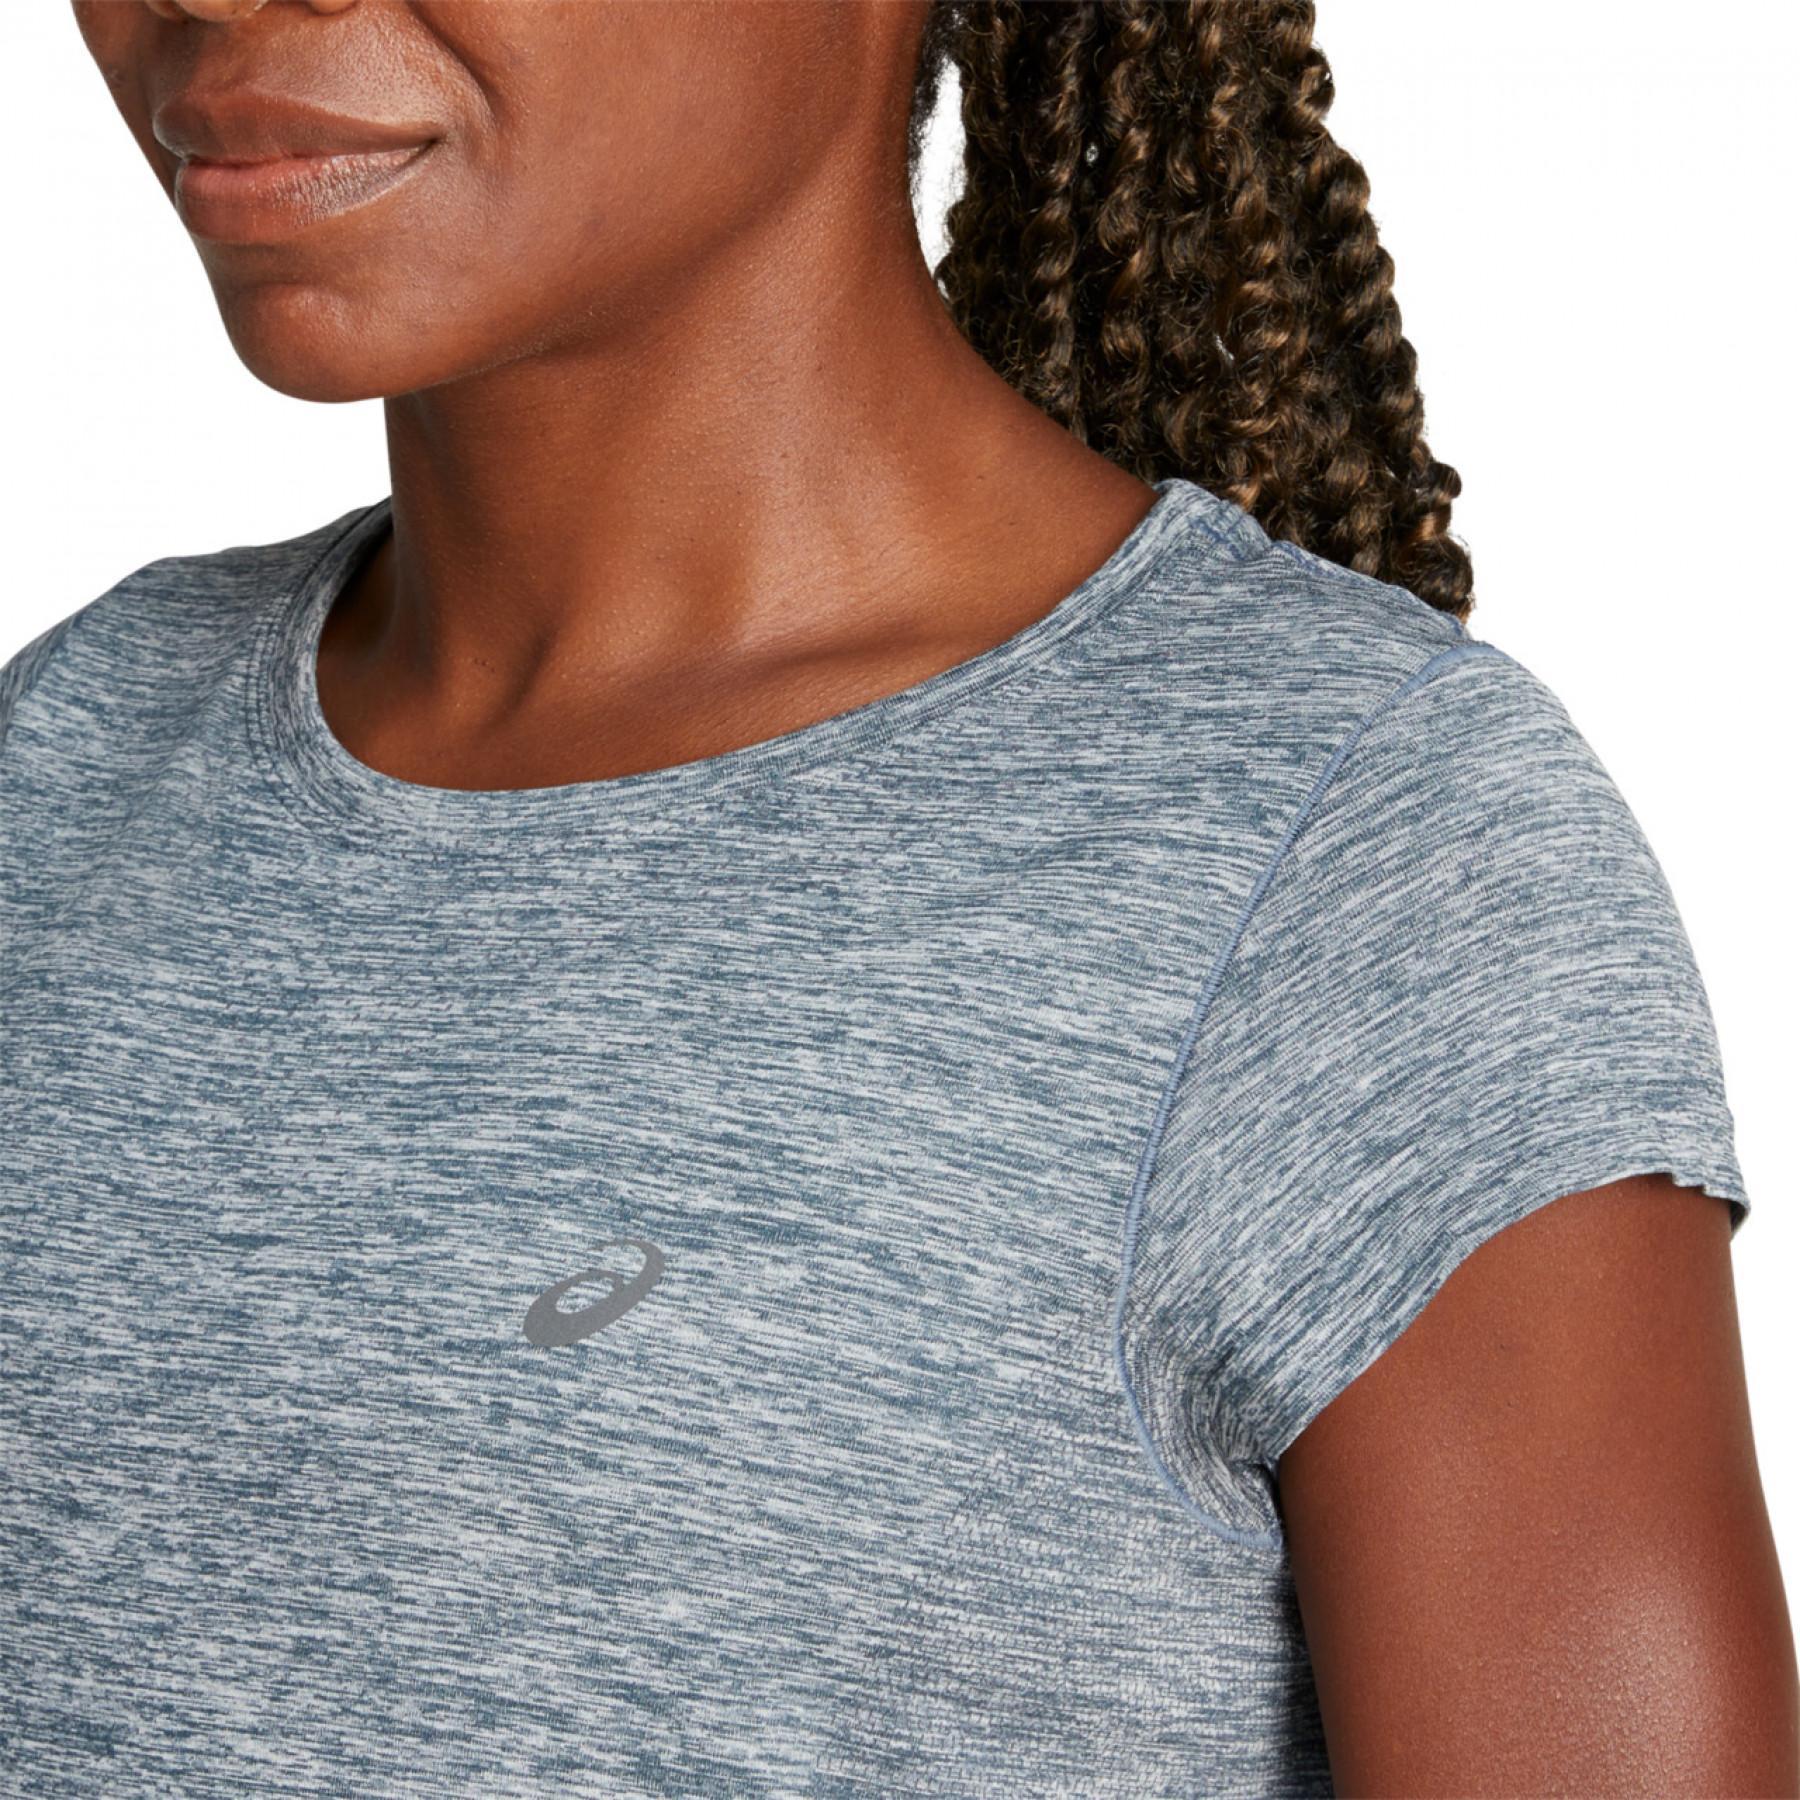 Camiseta sem costura para mulheres Asics Race